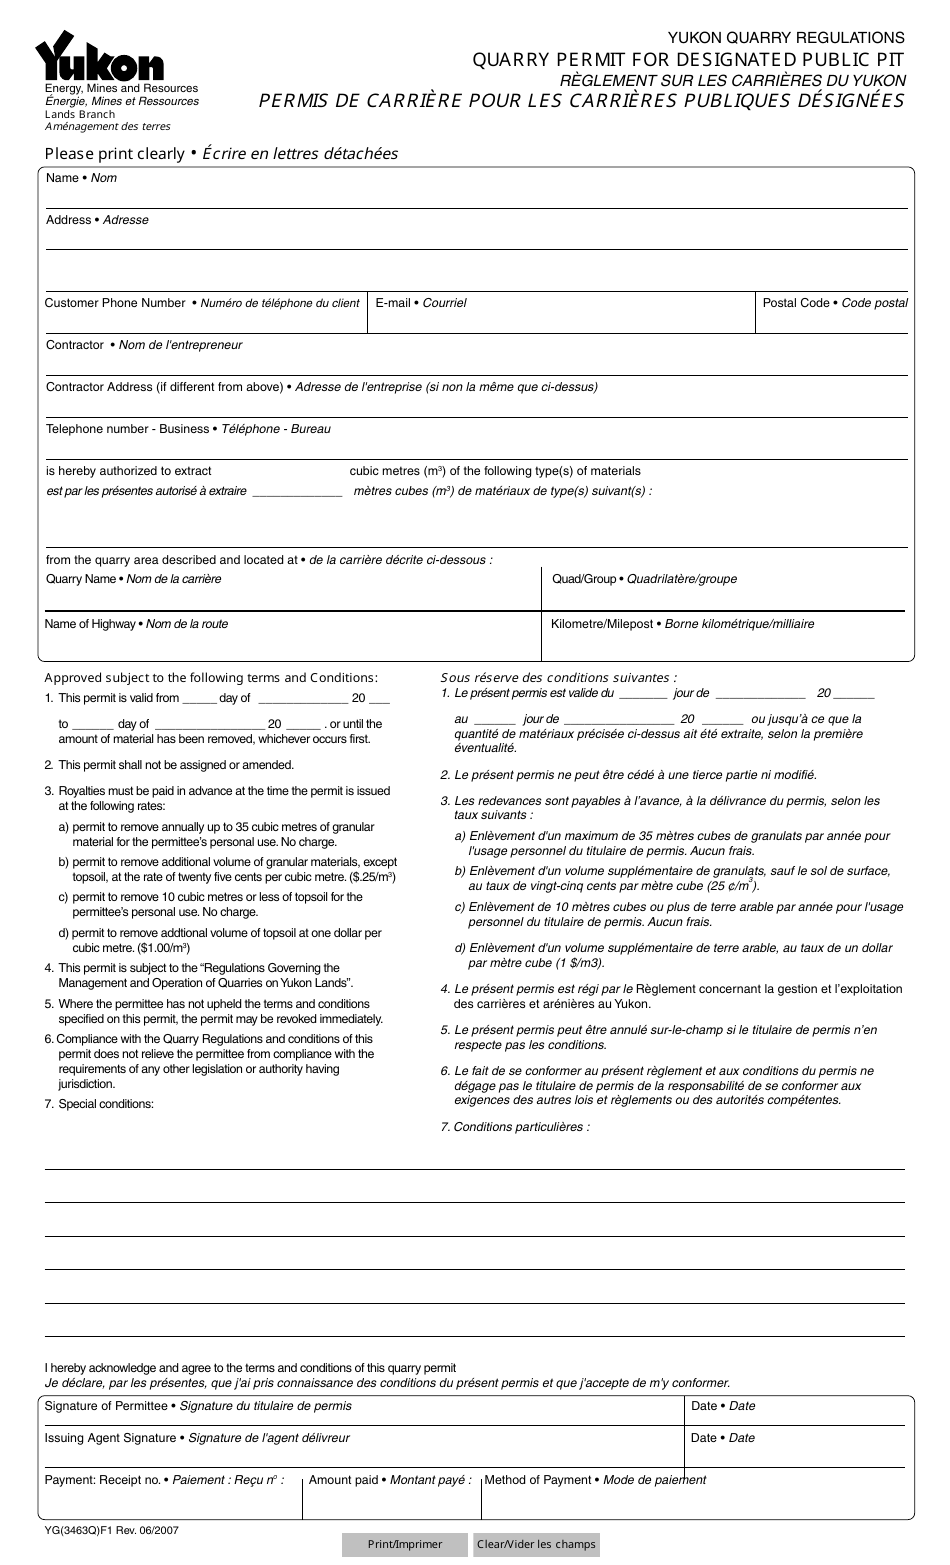 Form YG3463 Quarry Permit for Designated Public Pit - Yukon, Canada (English / French), Page 1